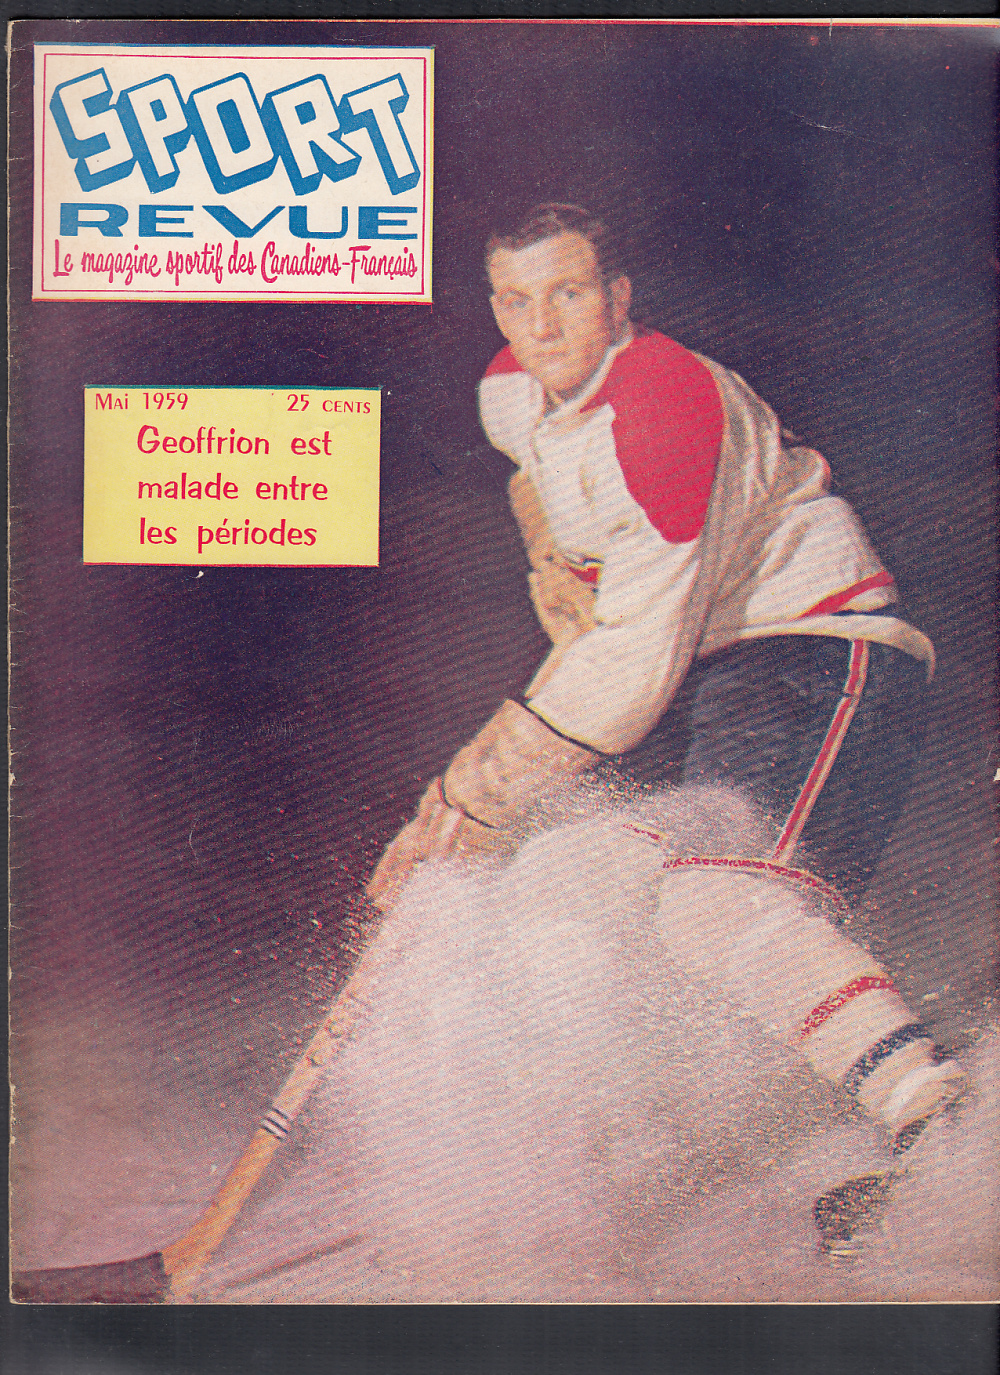 1959 SPORT REVUE MAGAZINE D. MOORE ON COVER photo